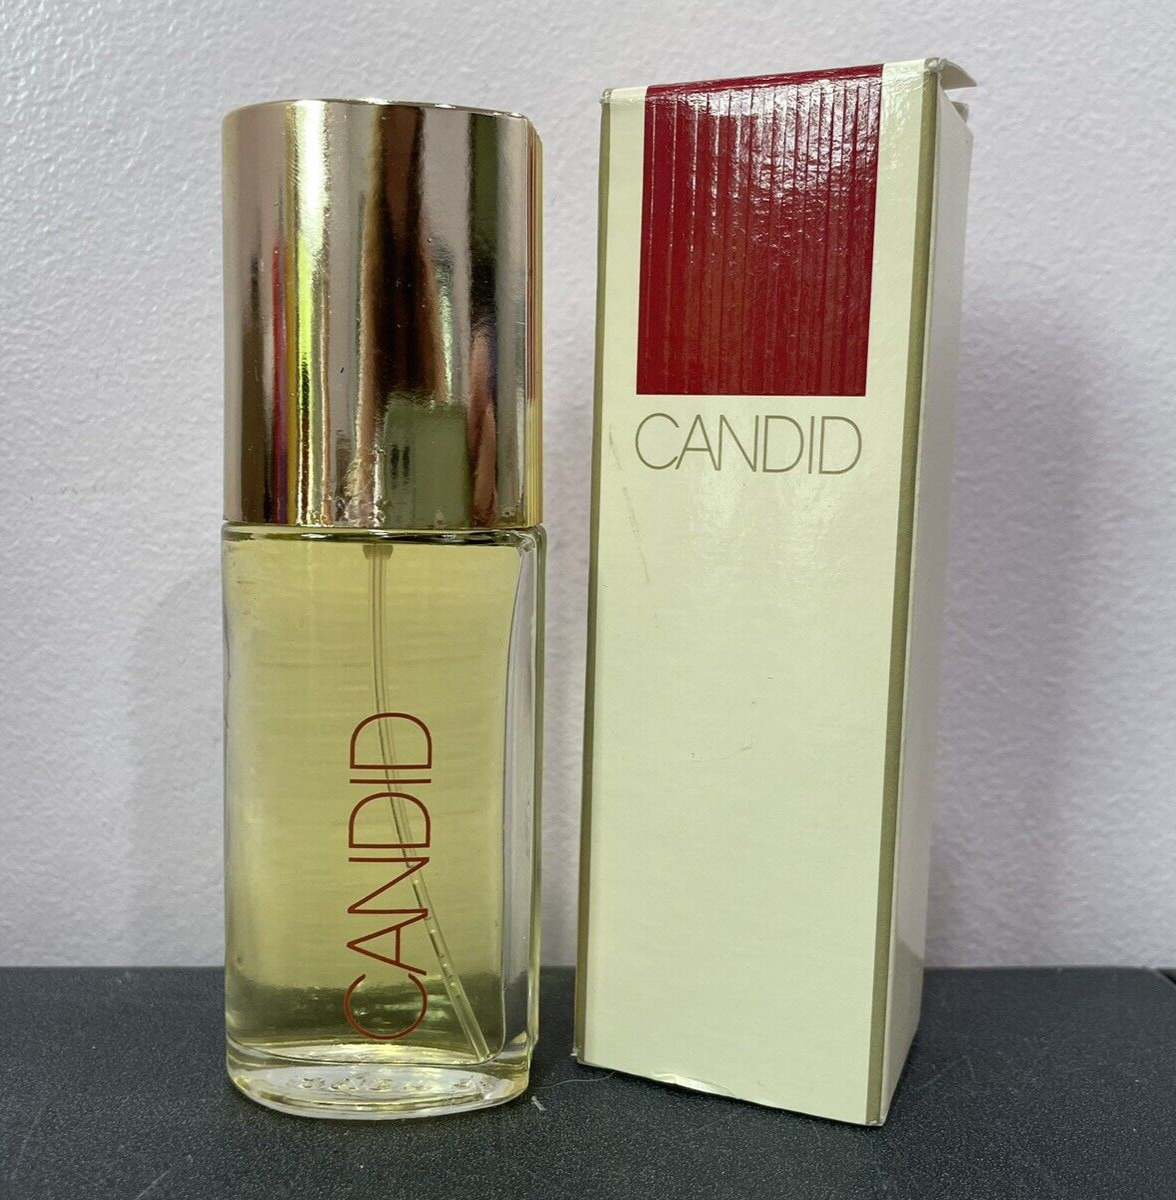 Candid COLOGNE SPRAY Avon 1.8 oz 1995 Perfume VINTAGE With Box